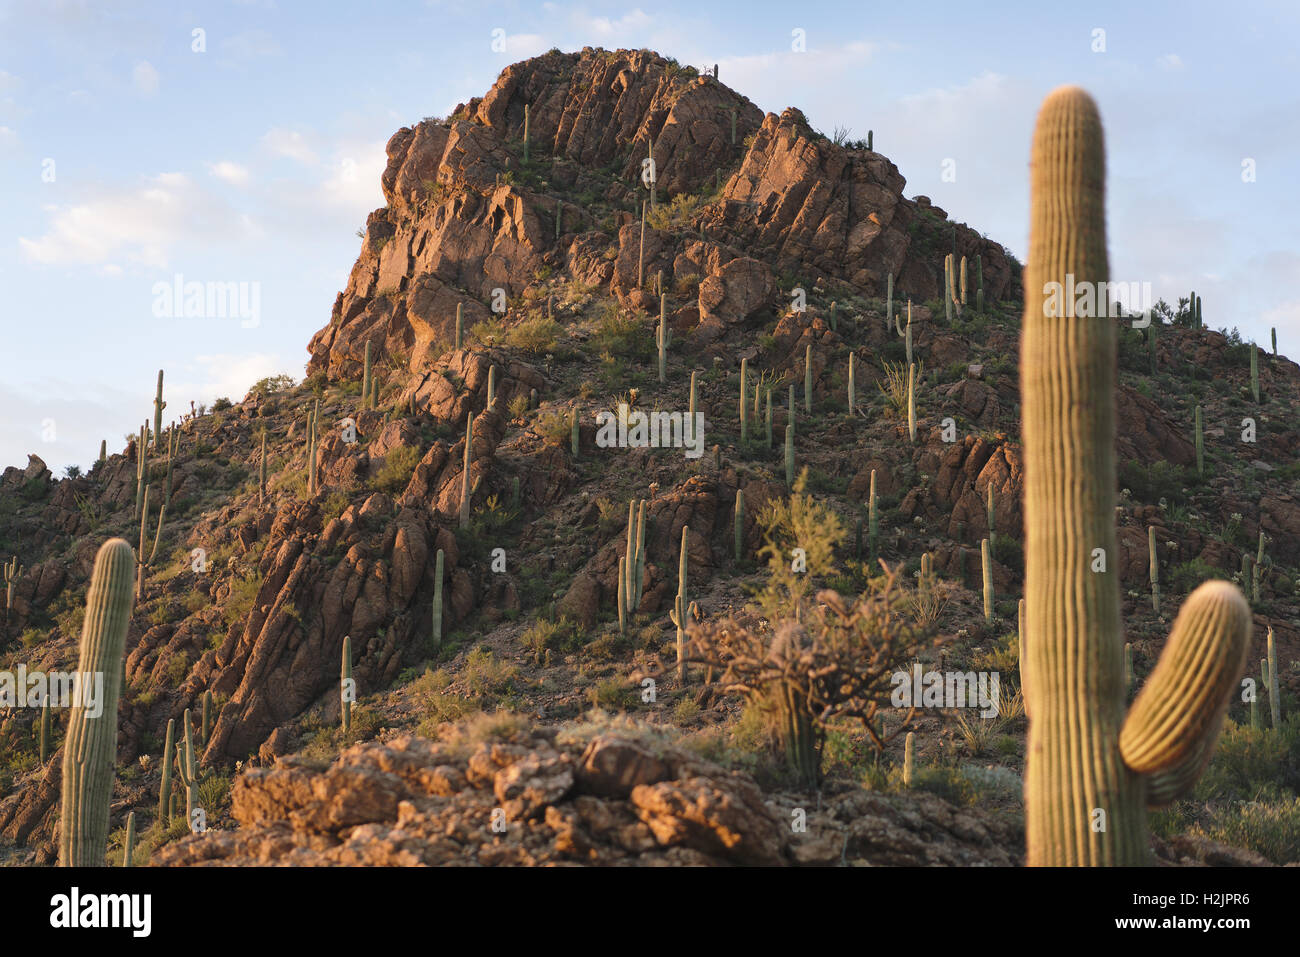 Saguaro cacti covered mountain in Saguaro National Park near Tuscon, Arizona Stock Photo